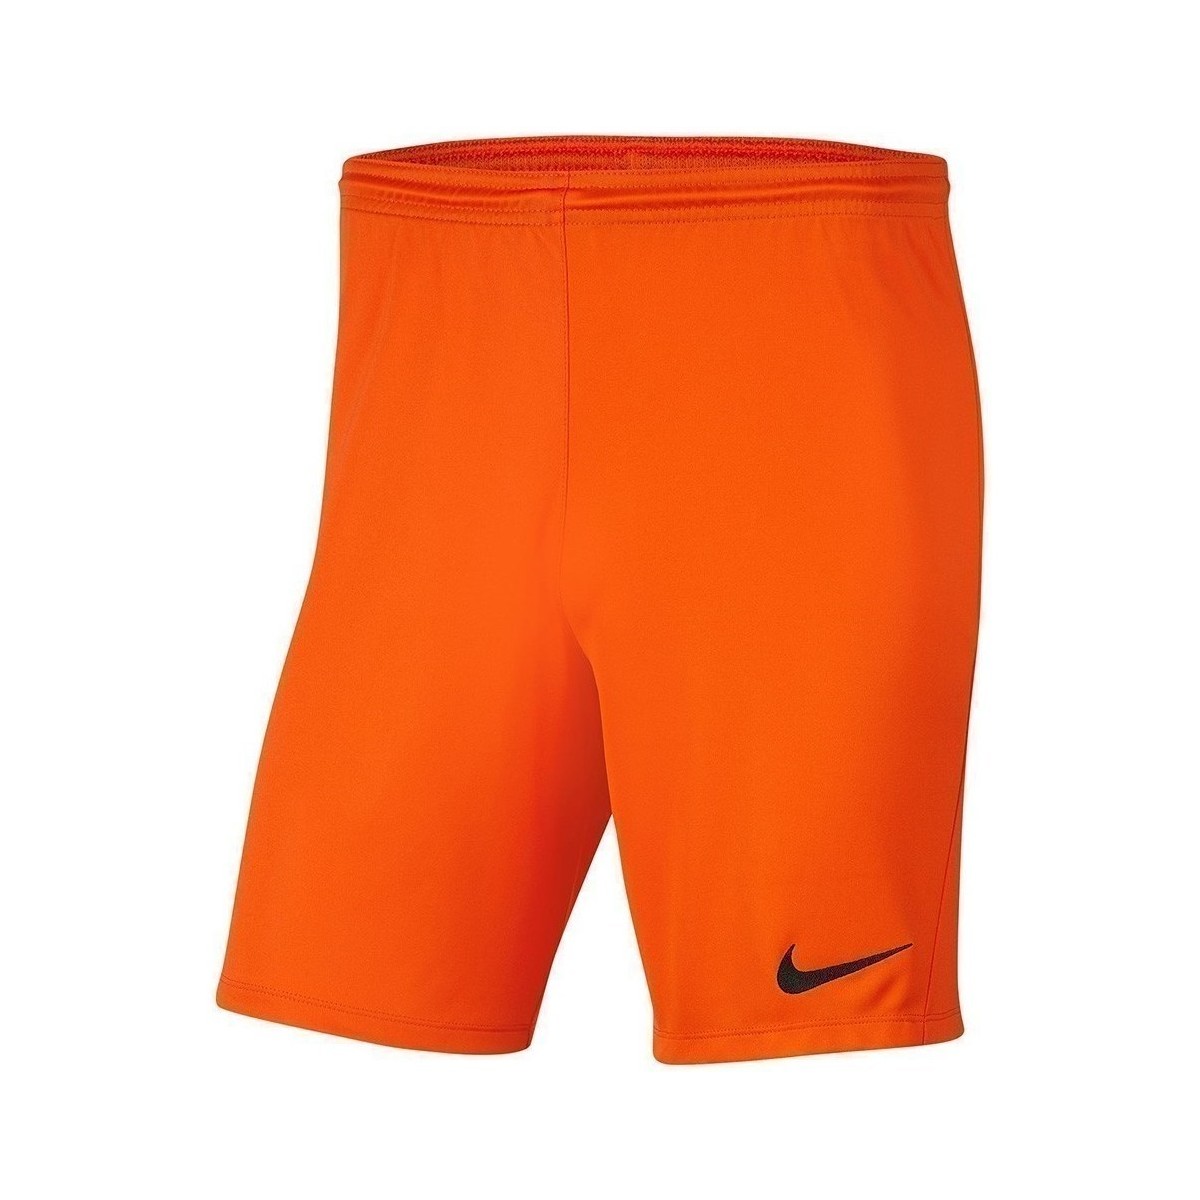 Vêtements Garçon Pantacourts Nike Dry Park Iii NB K Orange